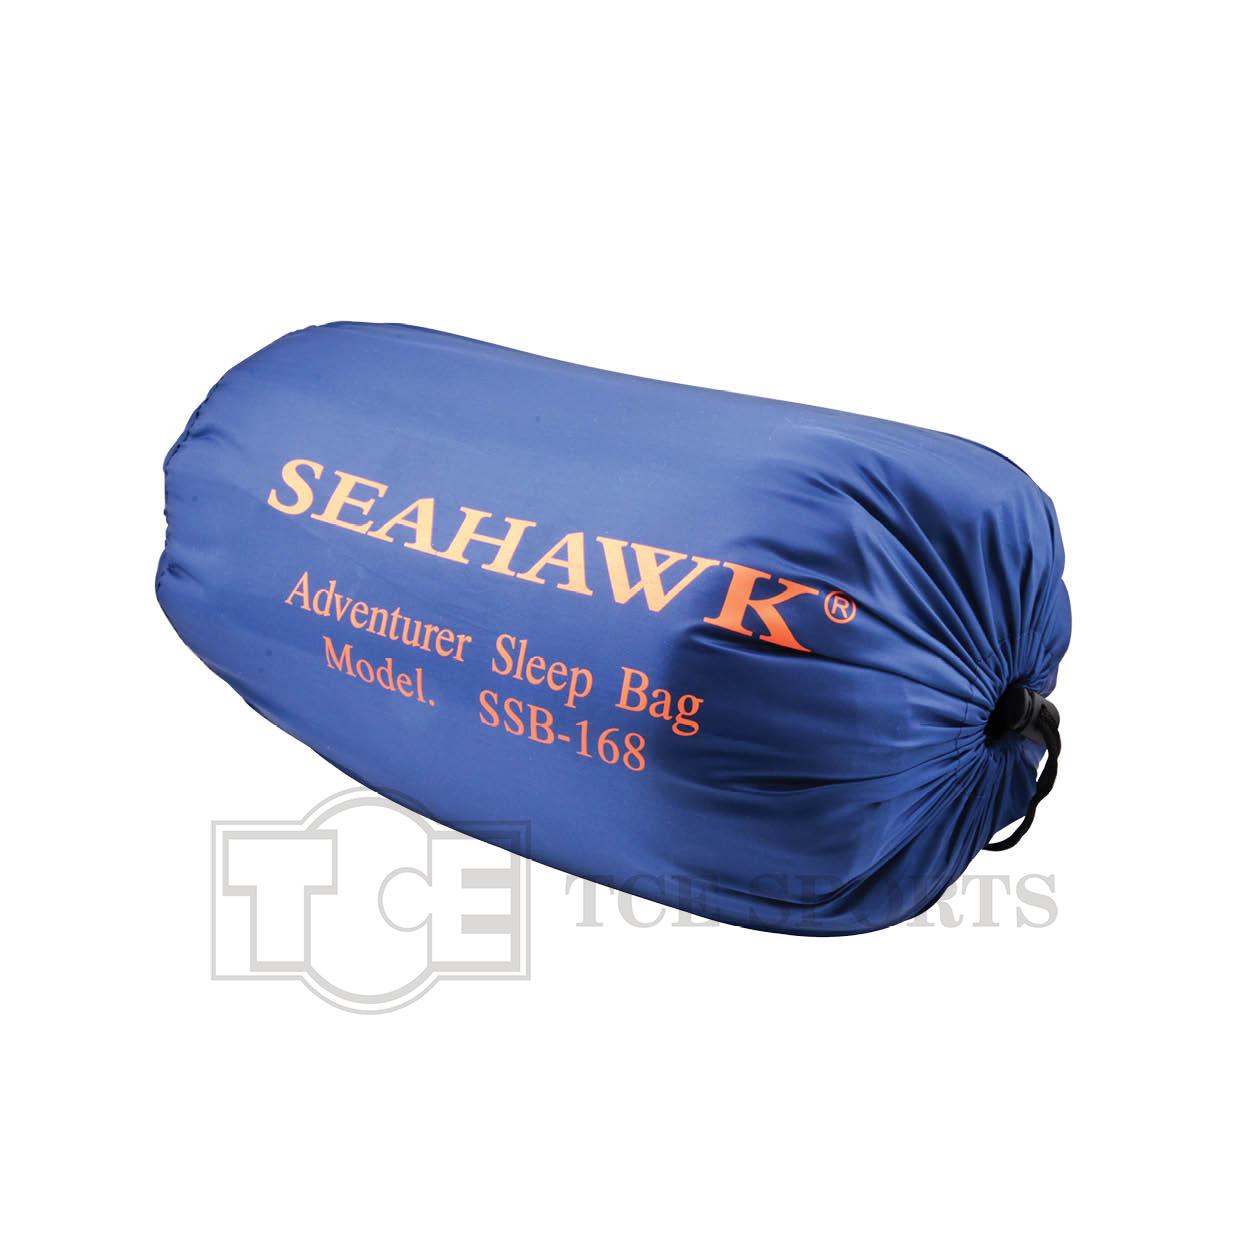 Seahawk - Adventurer Sleep Bag - SSB Main